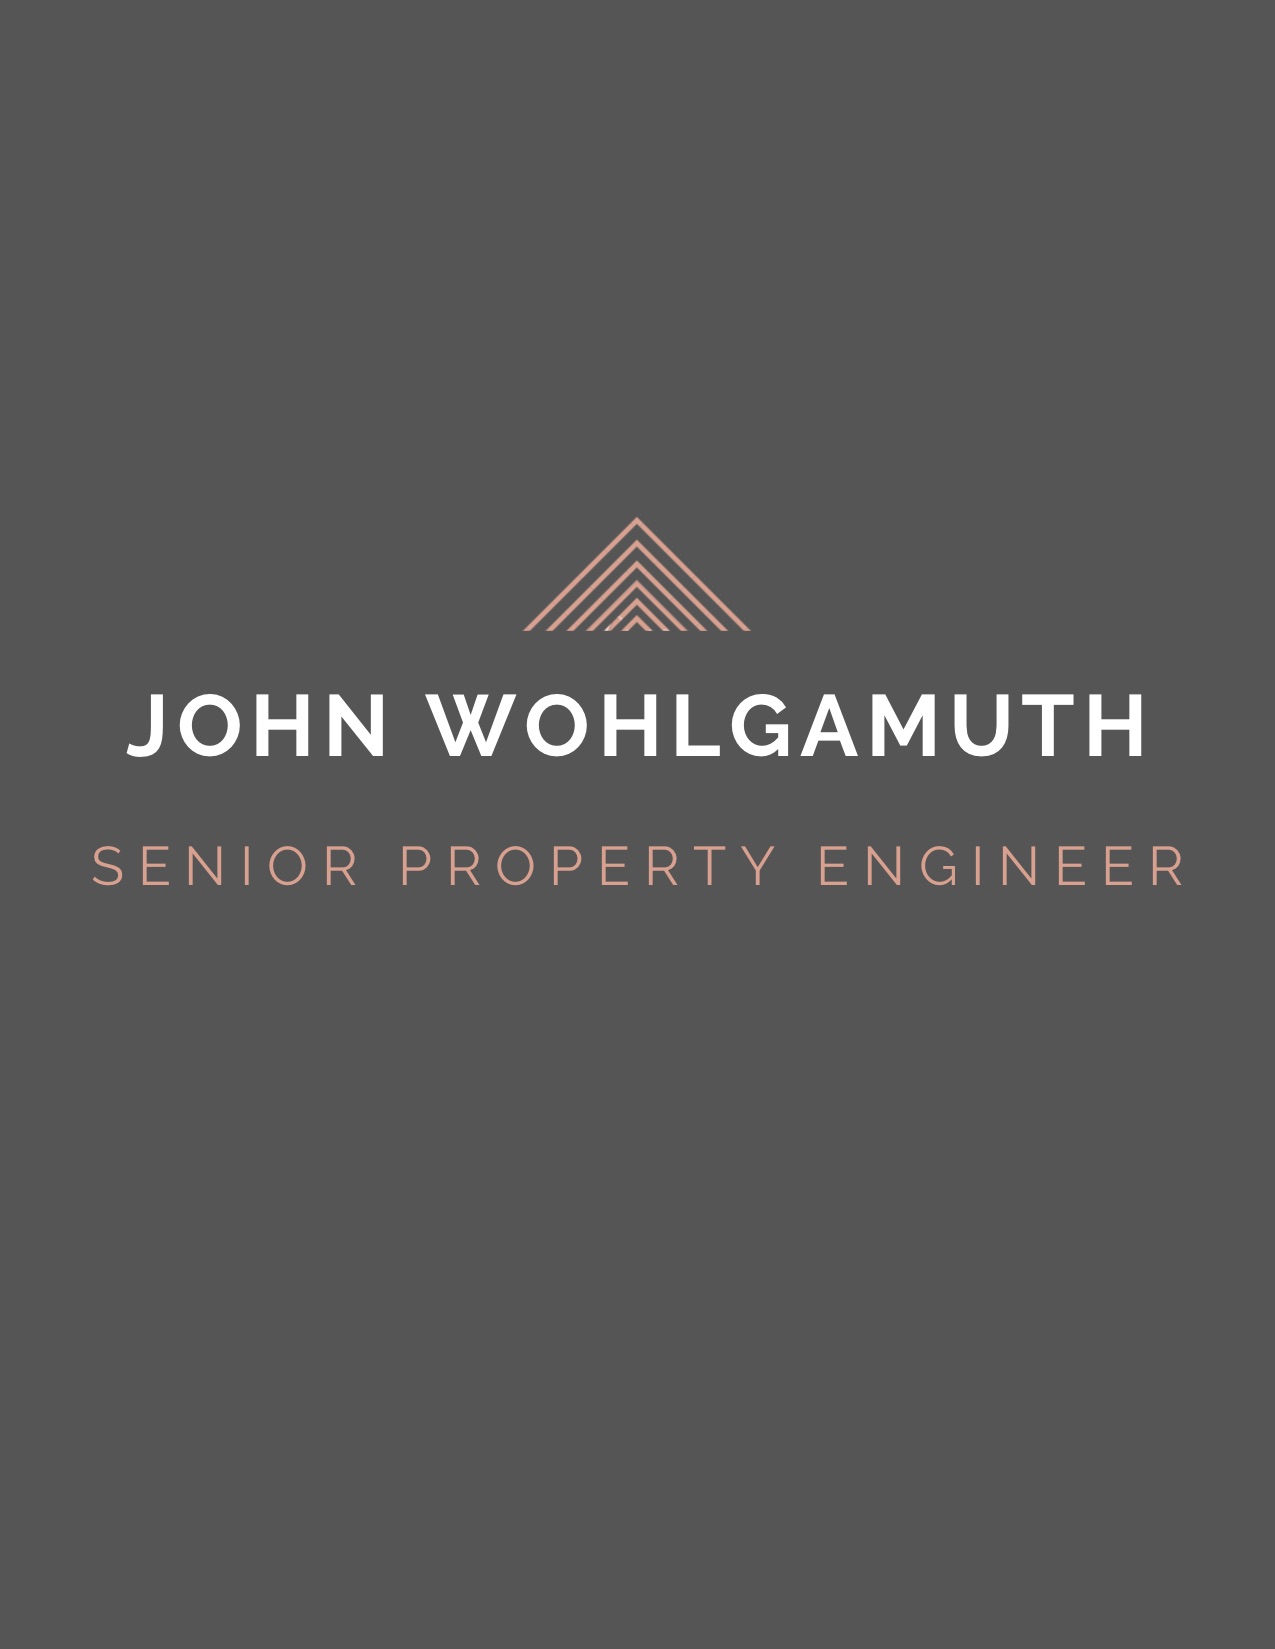 John Wohlgamuth